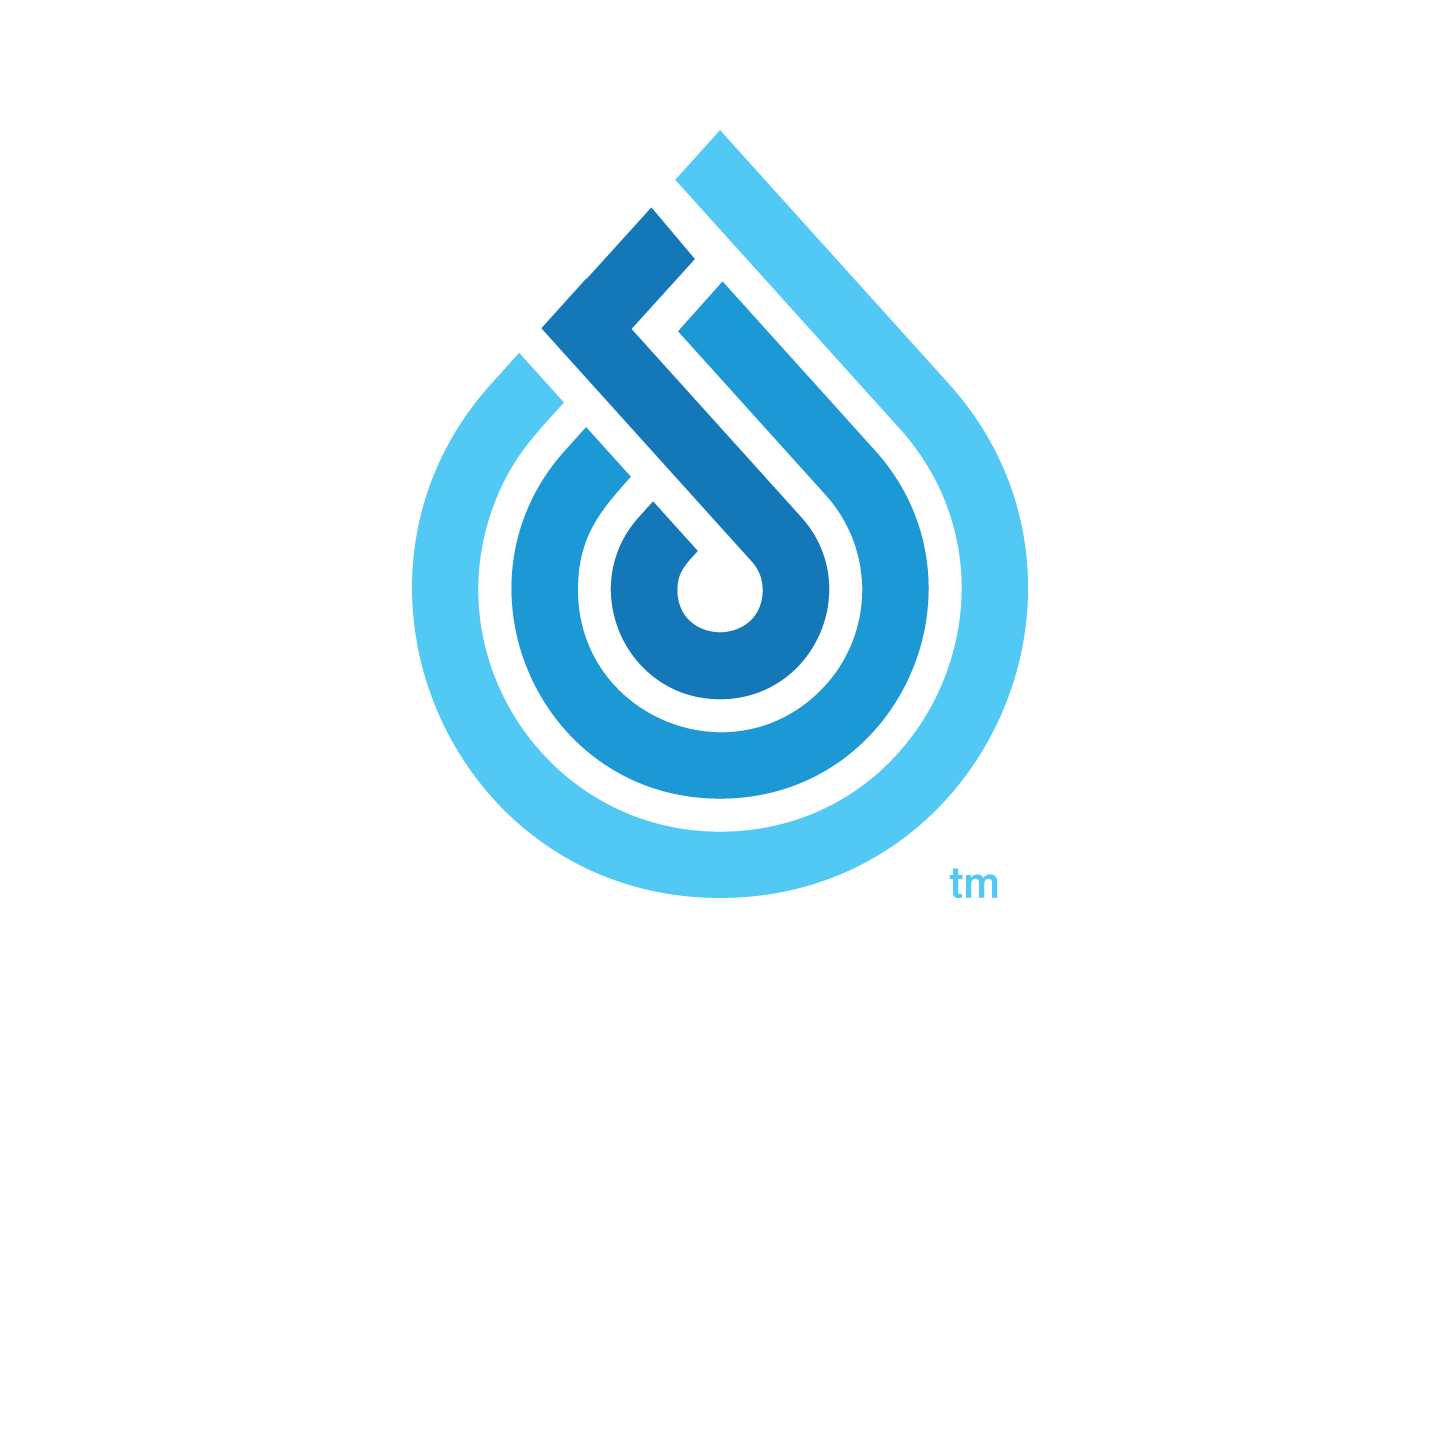 Clean Tech Service Solution